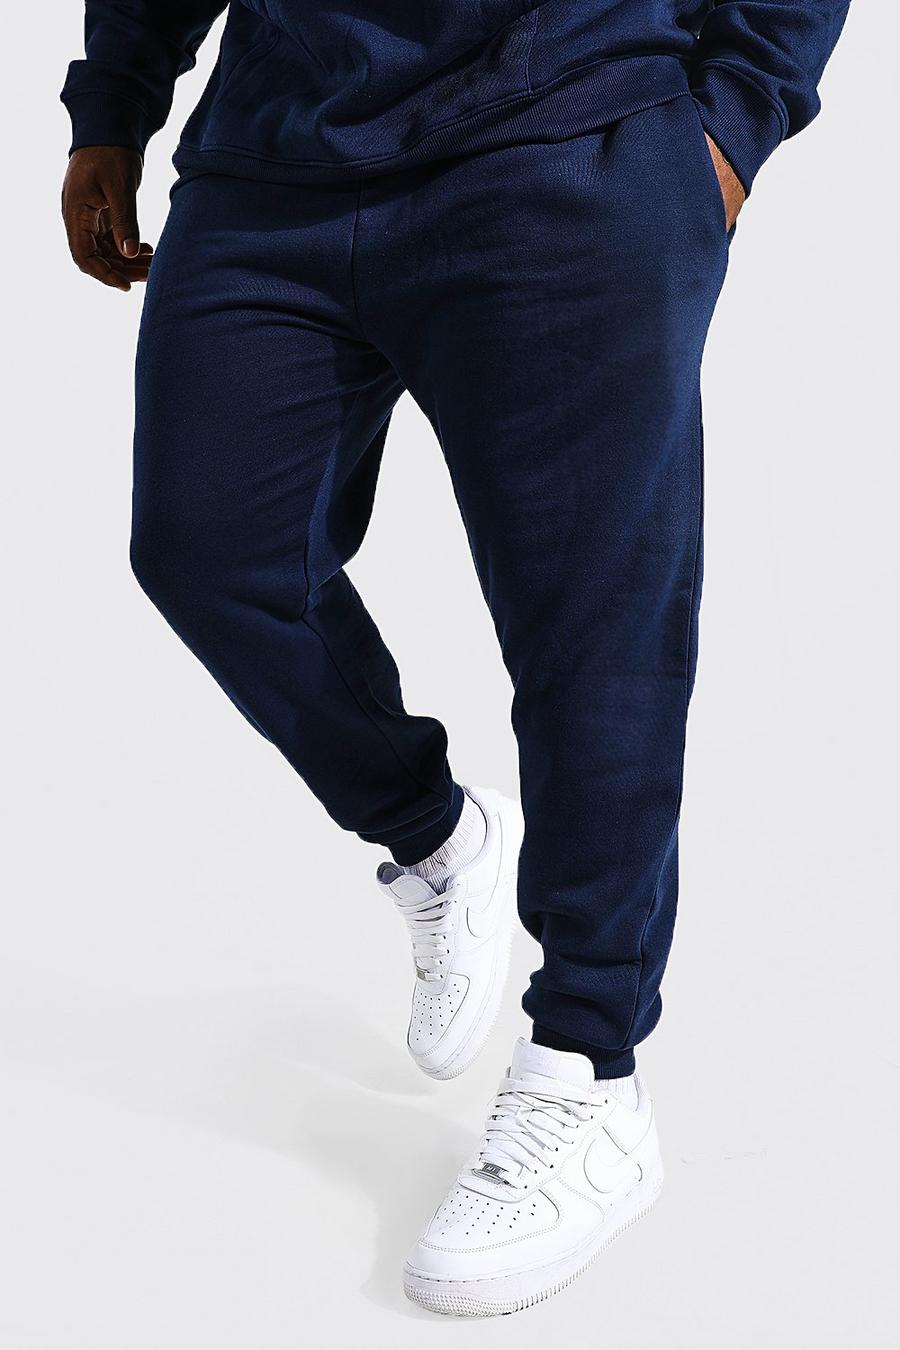 Pantaloni tuta Plus Size Basic Skinny Fit in fibre riciclate, Navy azul marino image number 1